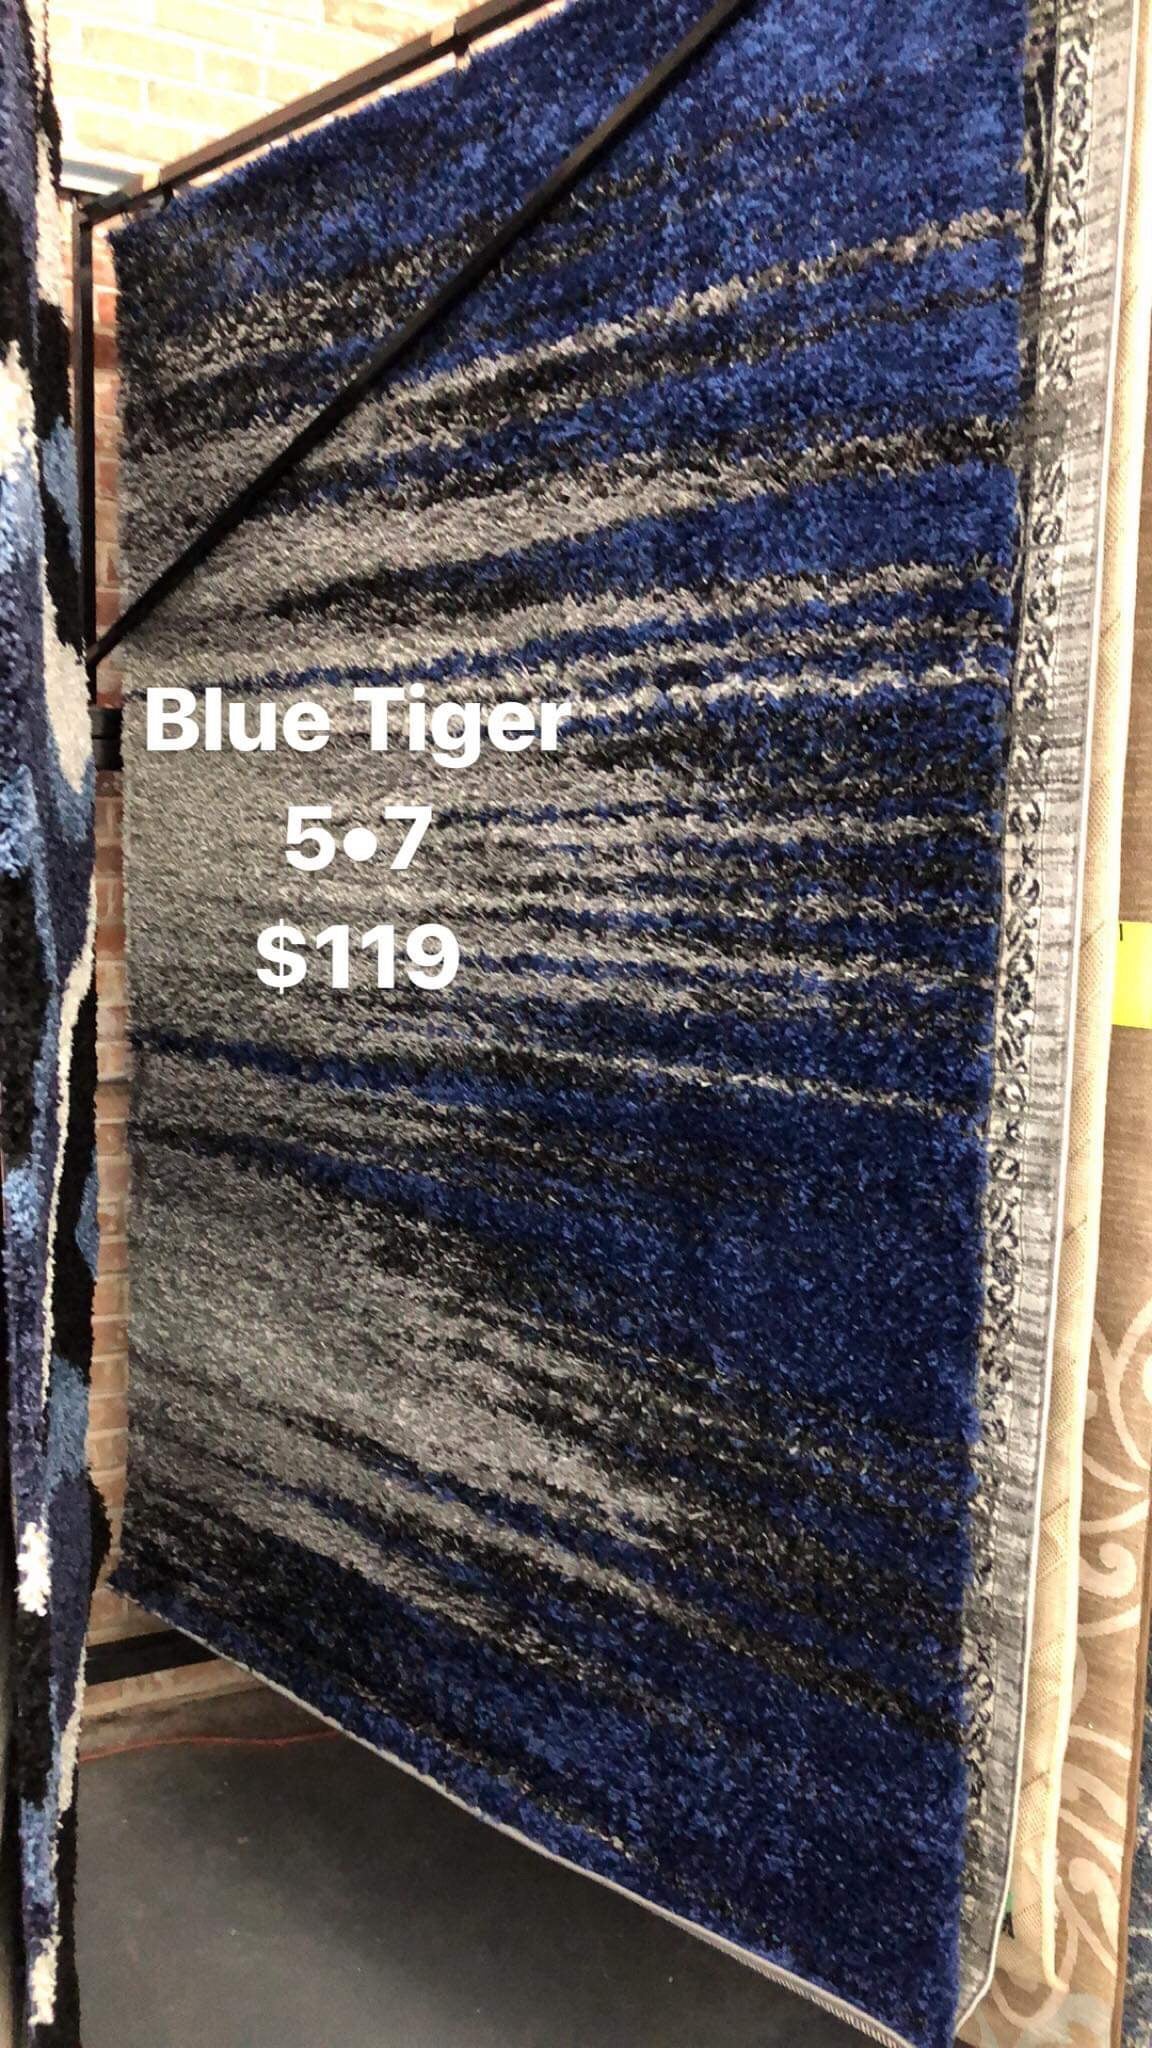 5x7 Blue Tiger Rug